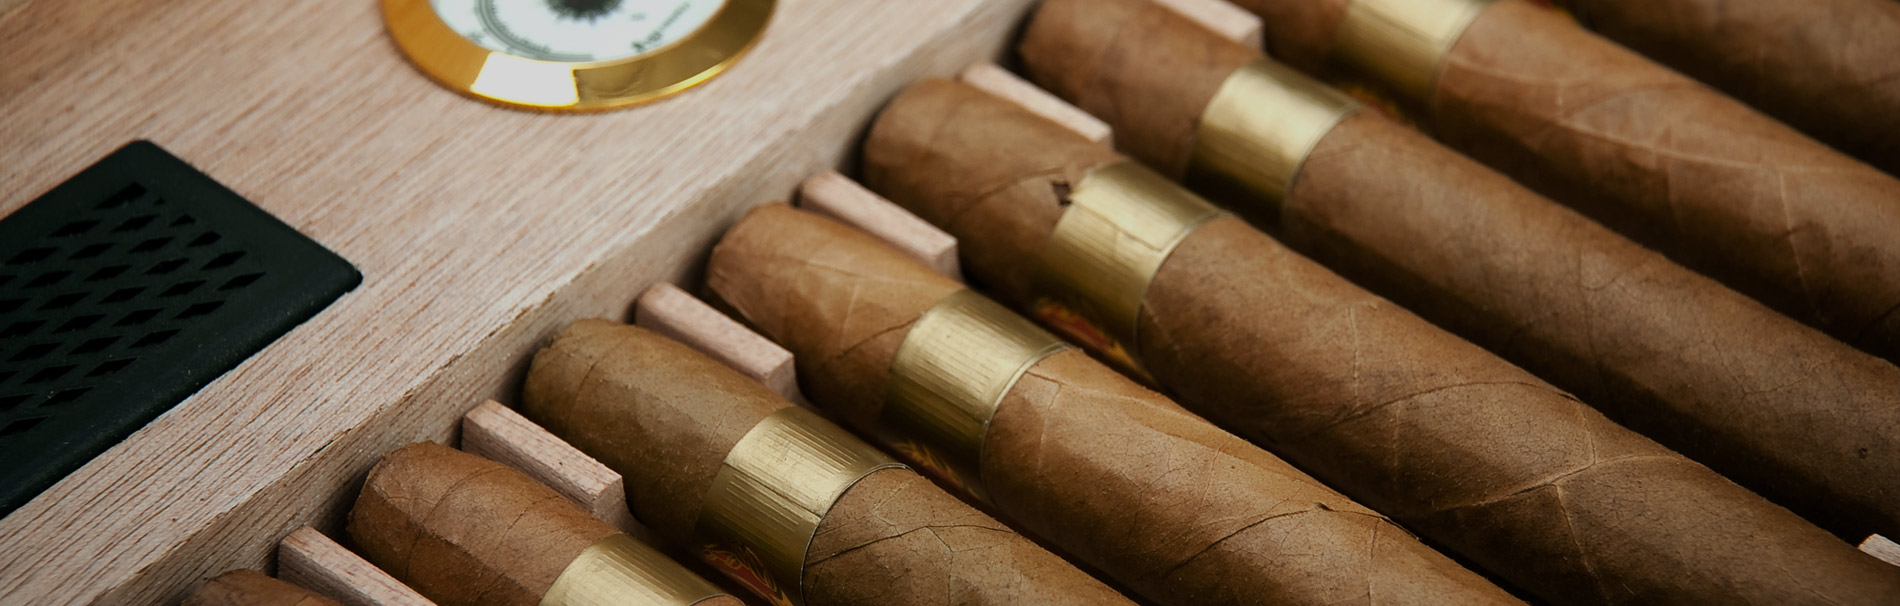 Cigars header image